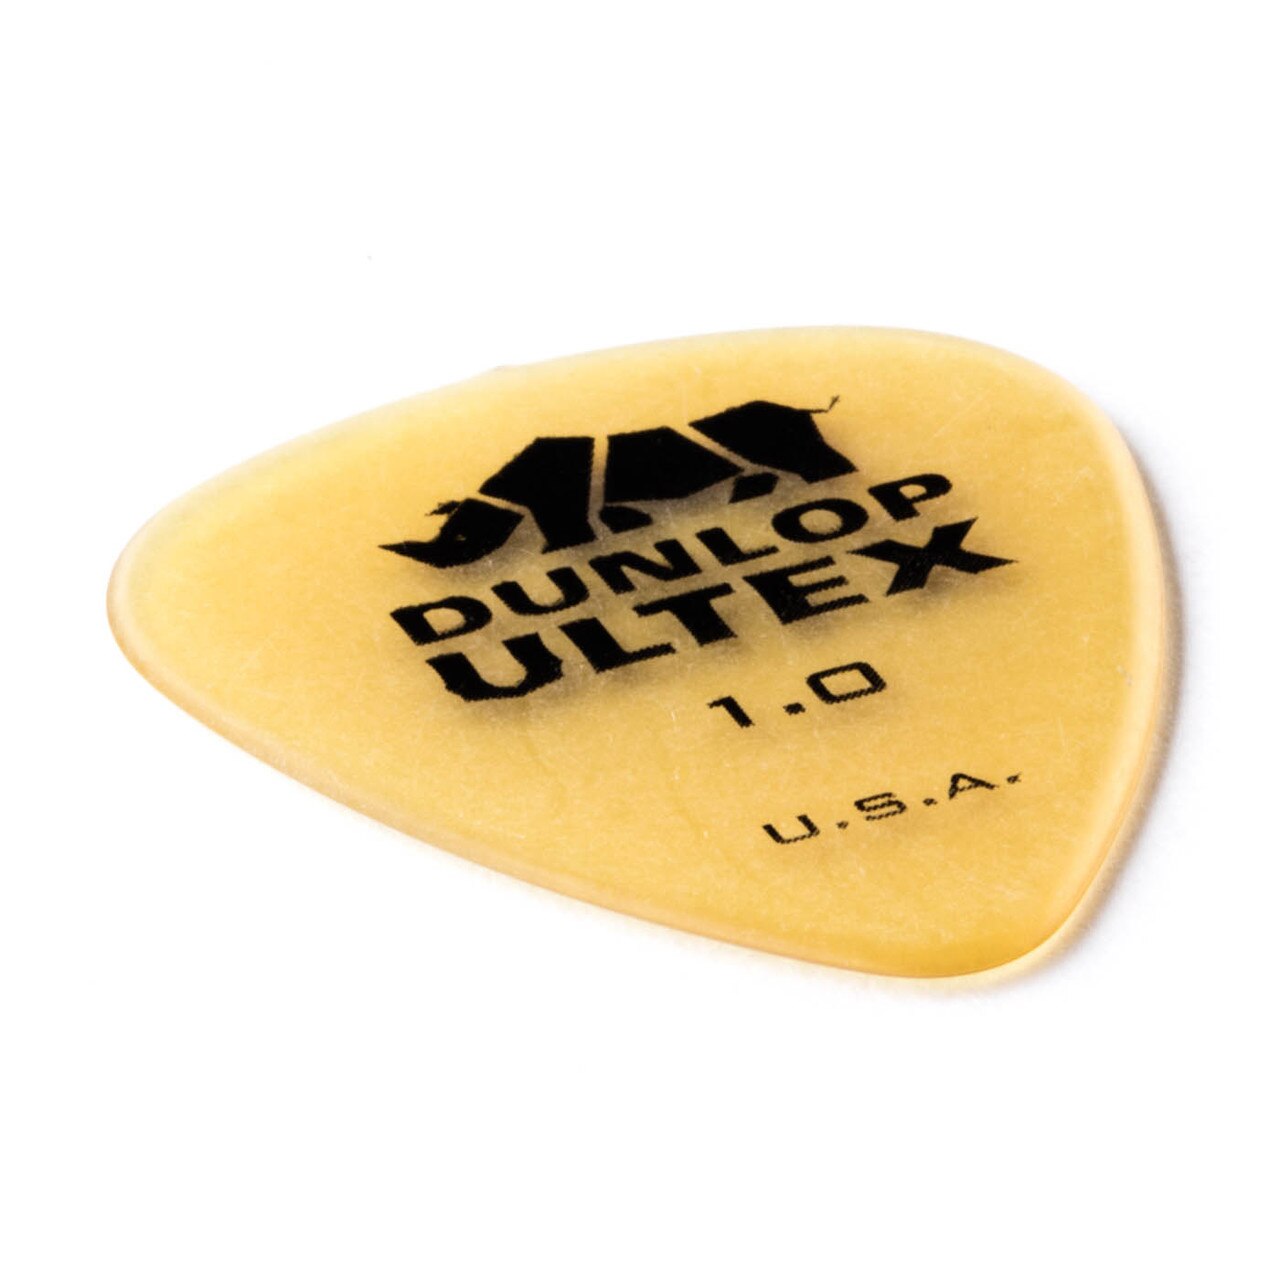 Jim Dunlop Ultex Sharp 433 1.00mm - Guitar pick - Variation 1